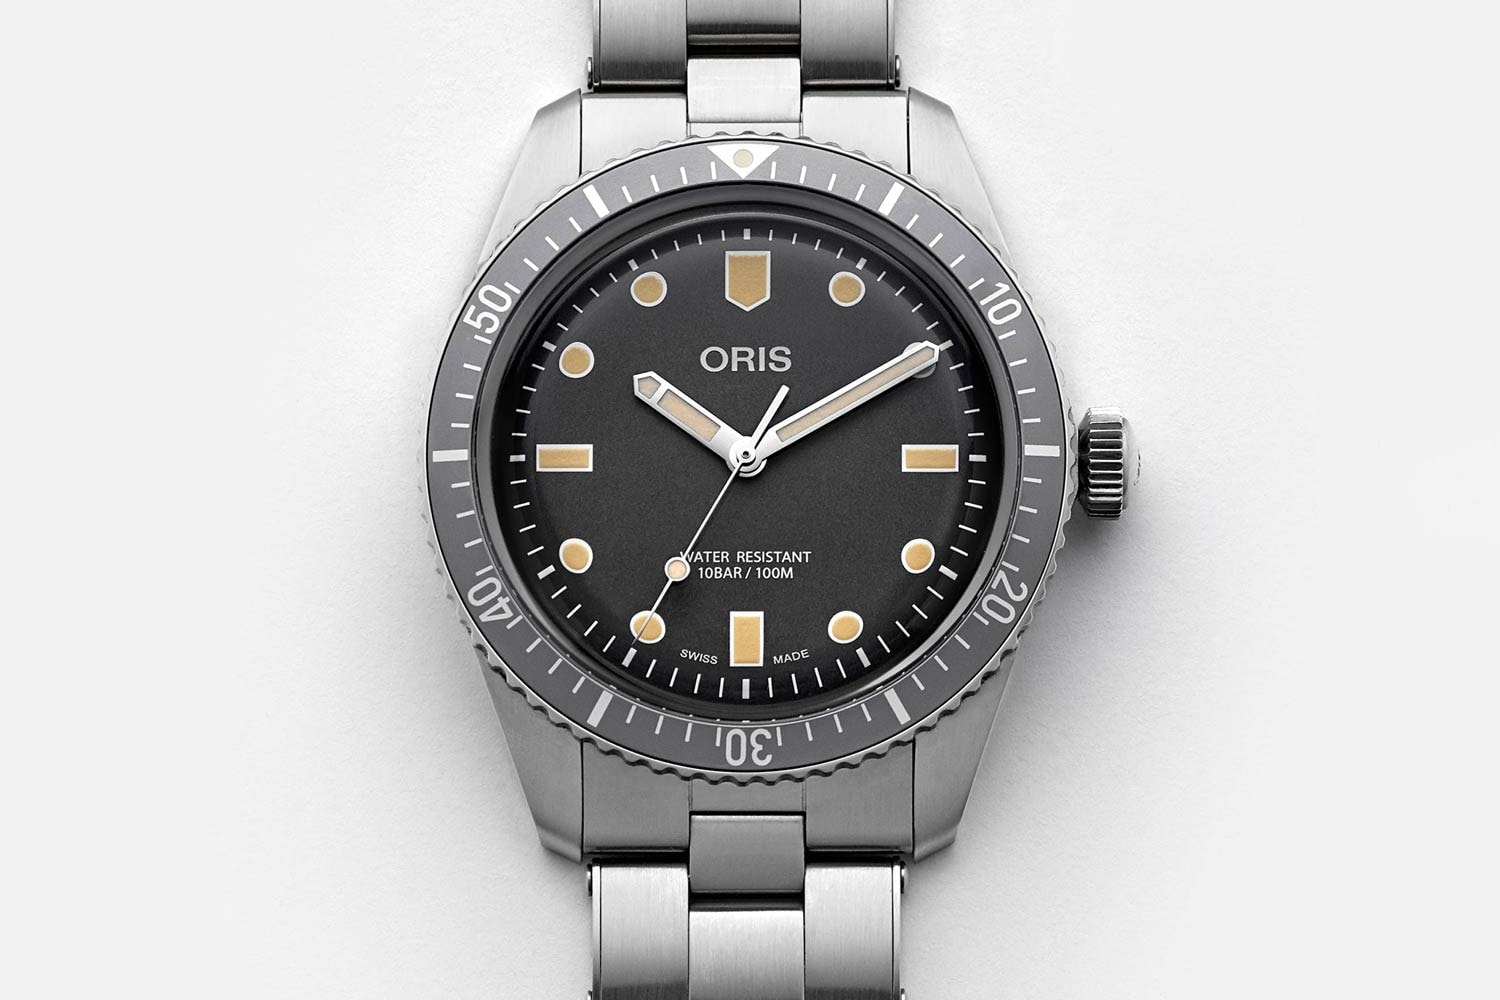 Hodinkee x Oris Divers Sixty Five Watch swiss made watches timepiece diving ETA 